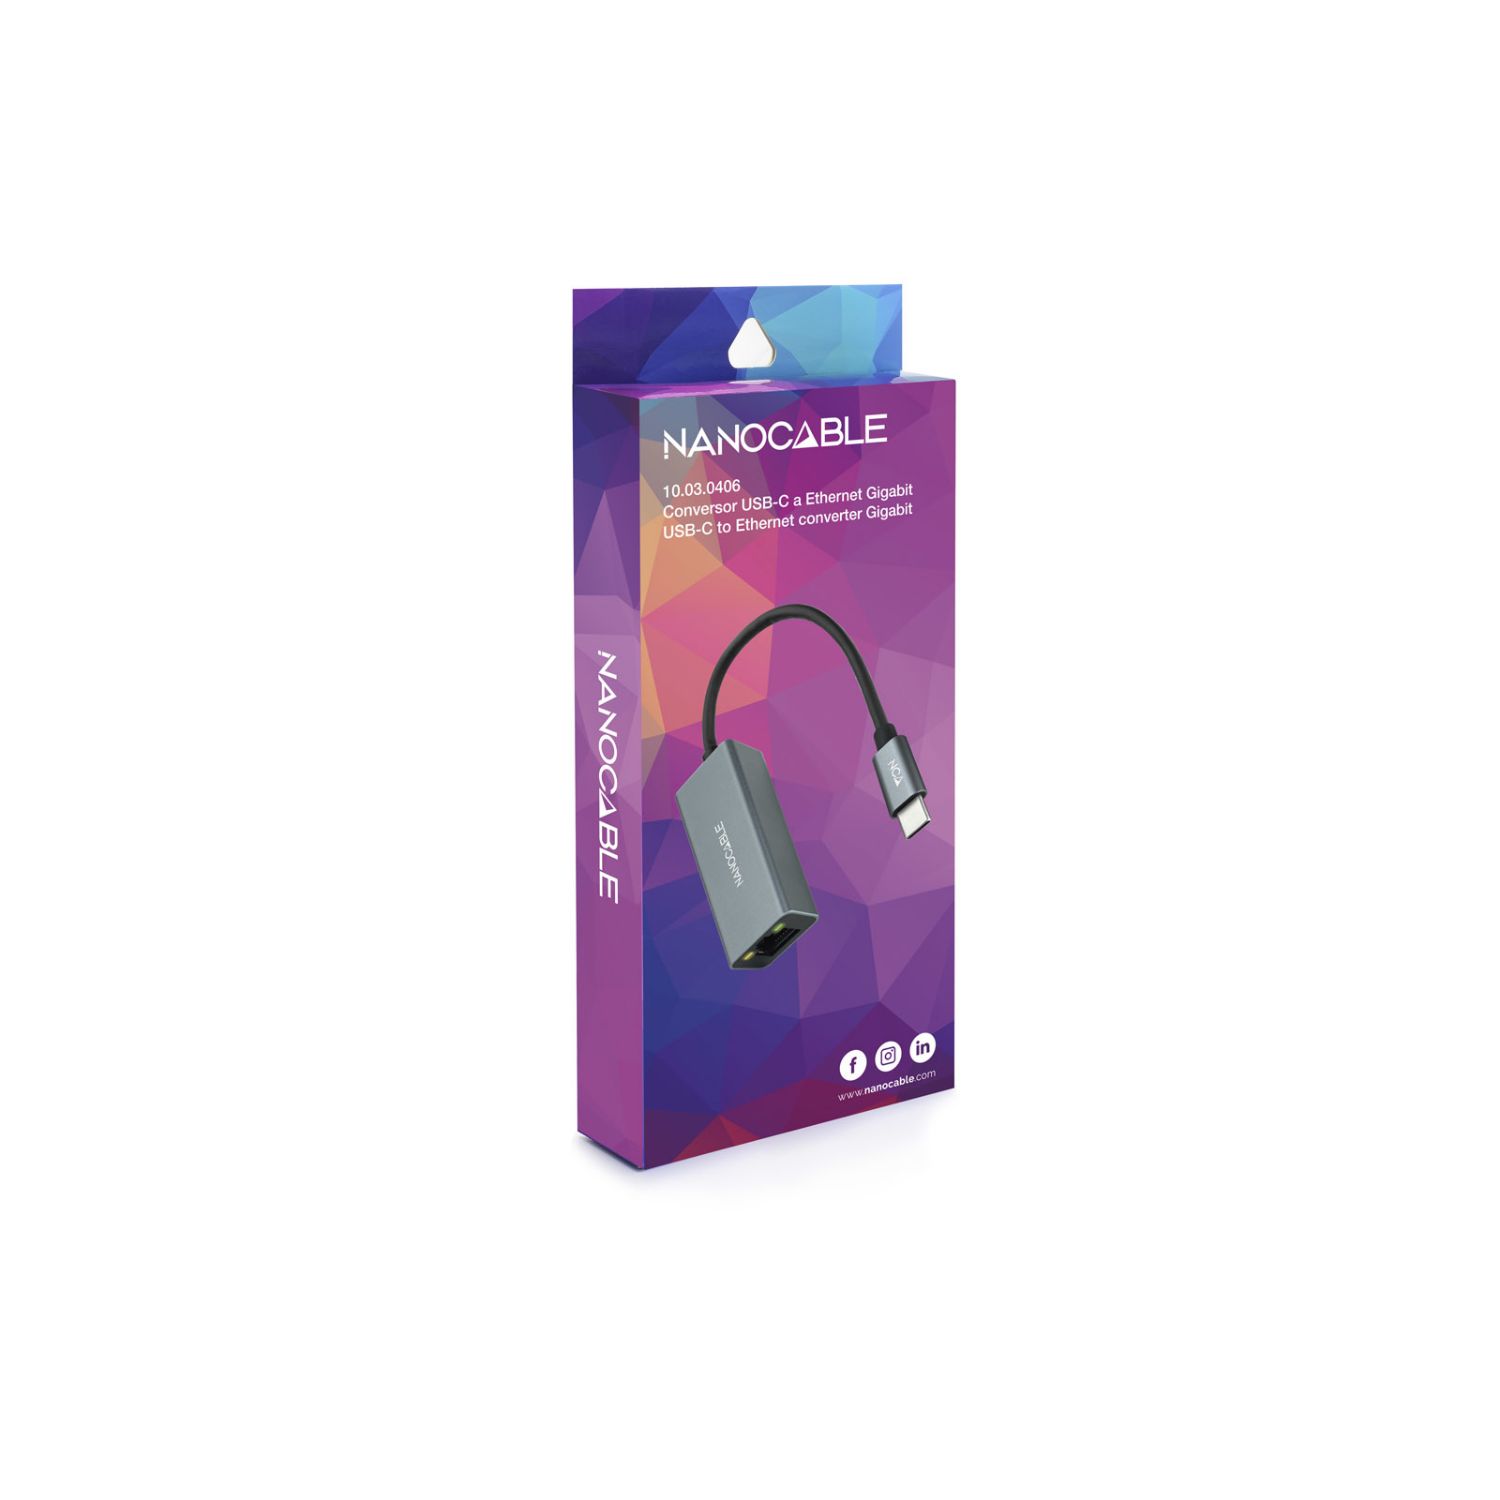 10.03.0406 - Adaptador Nanocable USB-C a RJ45 15cm Gris (10.03.0406)